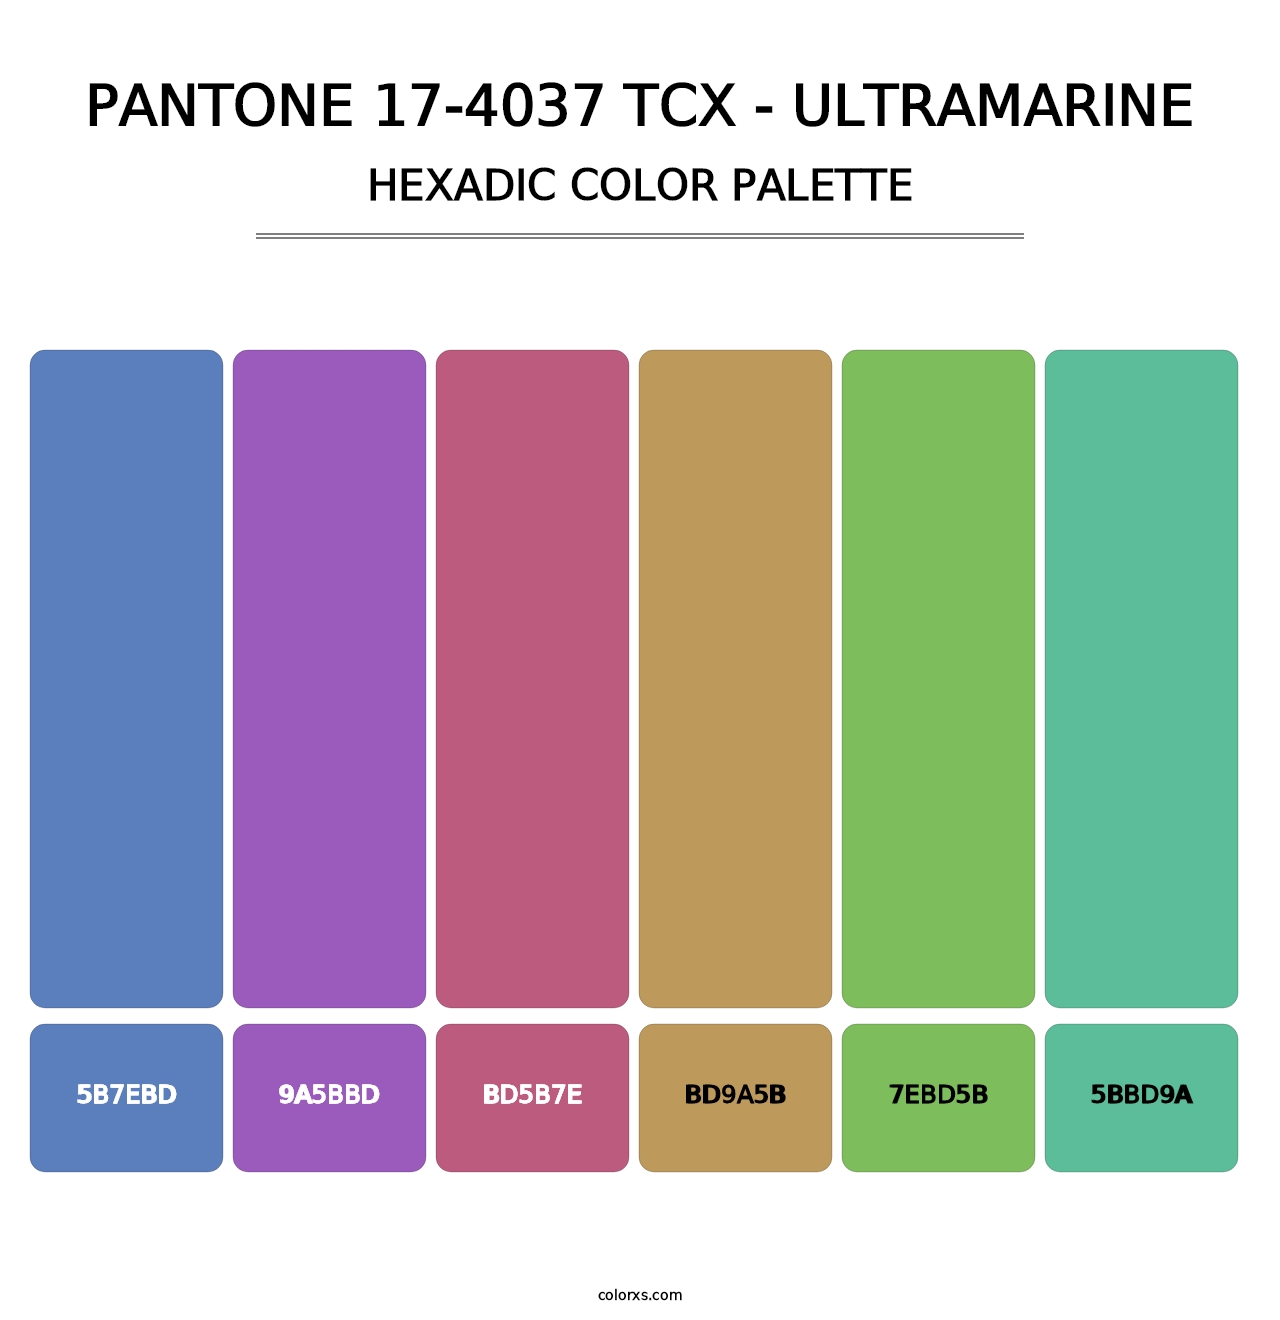 PANTONE 17-4037 TCX - Ultramarine - Hexadic Color Palette